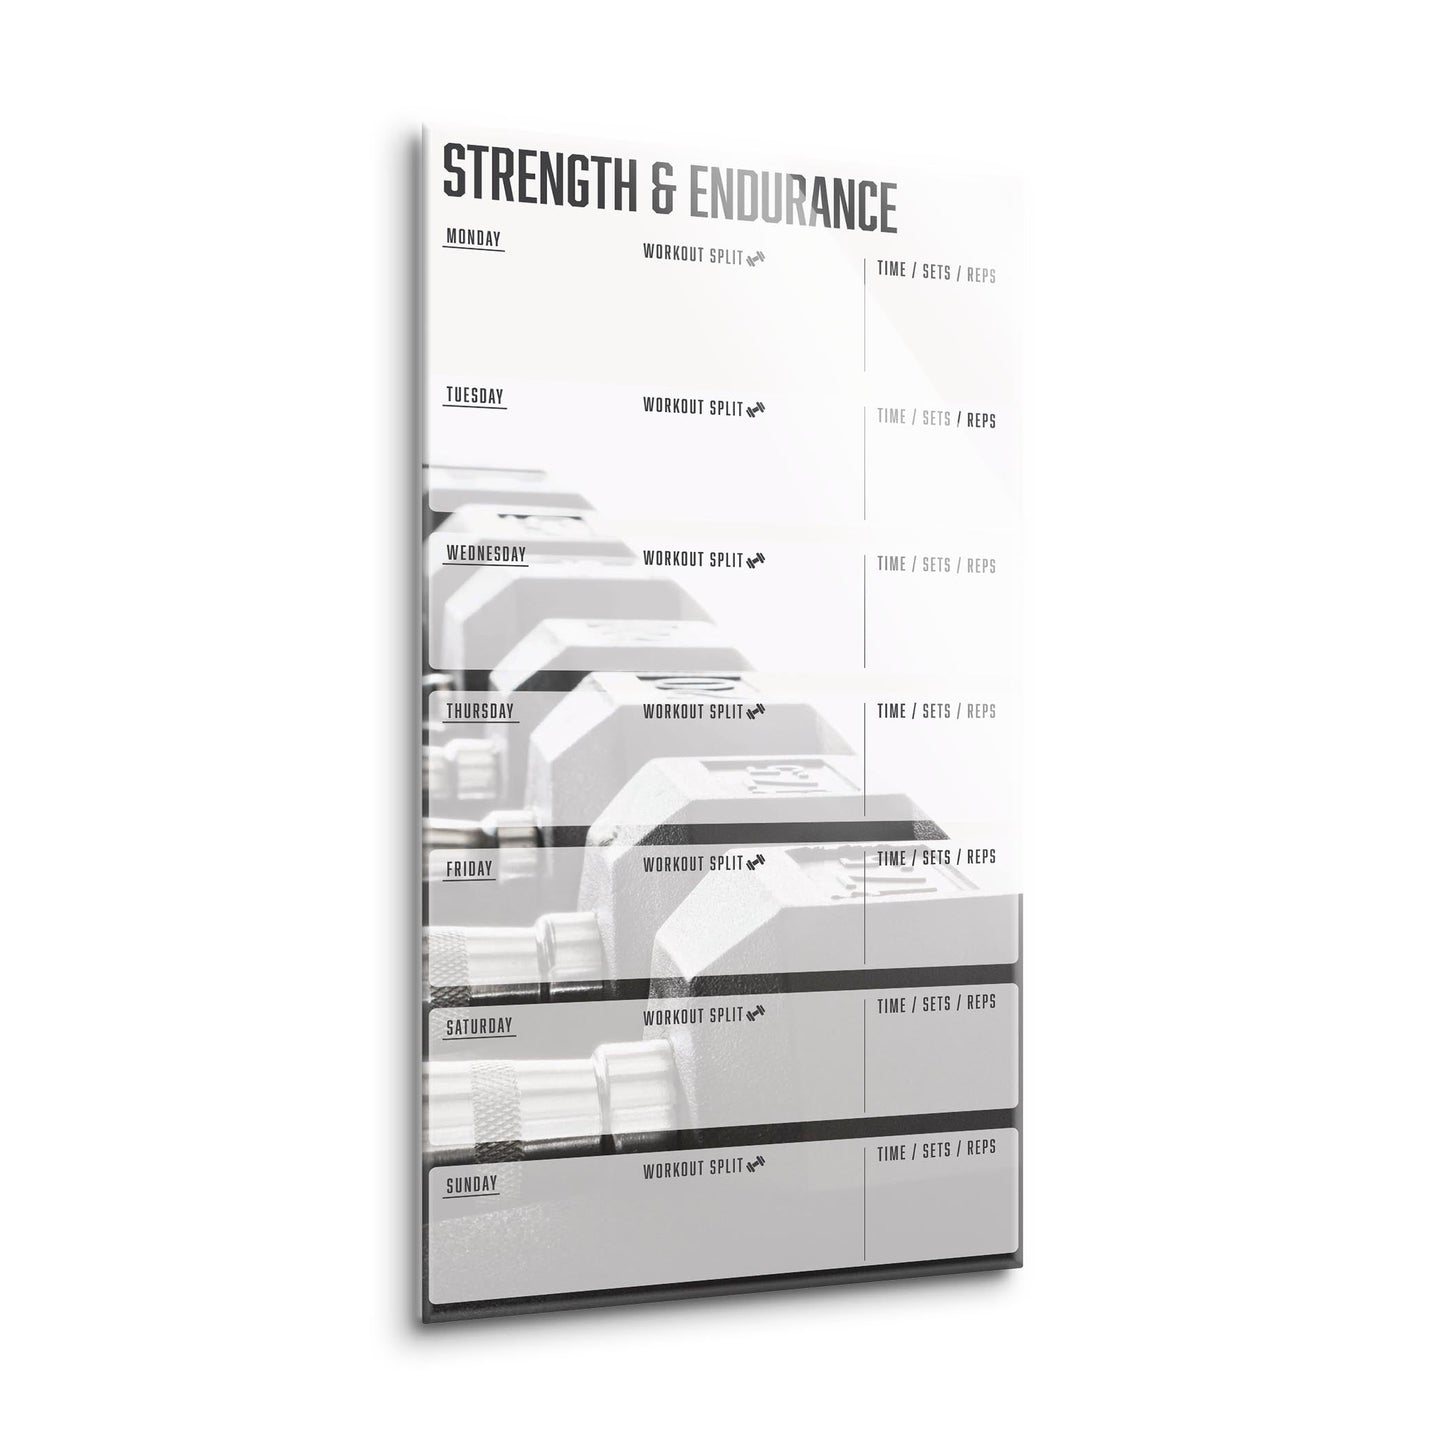 Weight Dumbbell Strength & Endurance Fitness Tracker | 8x16